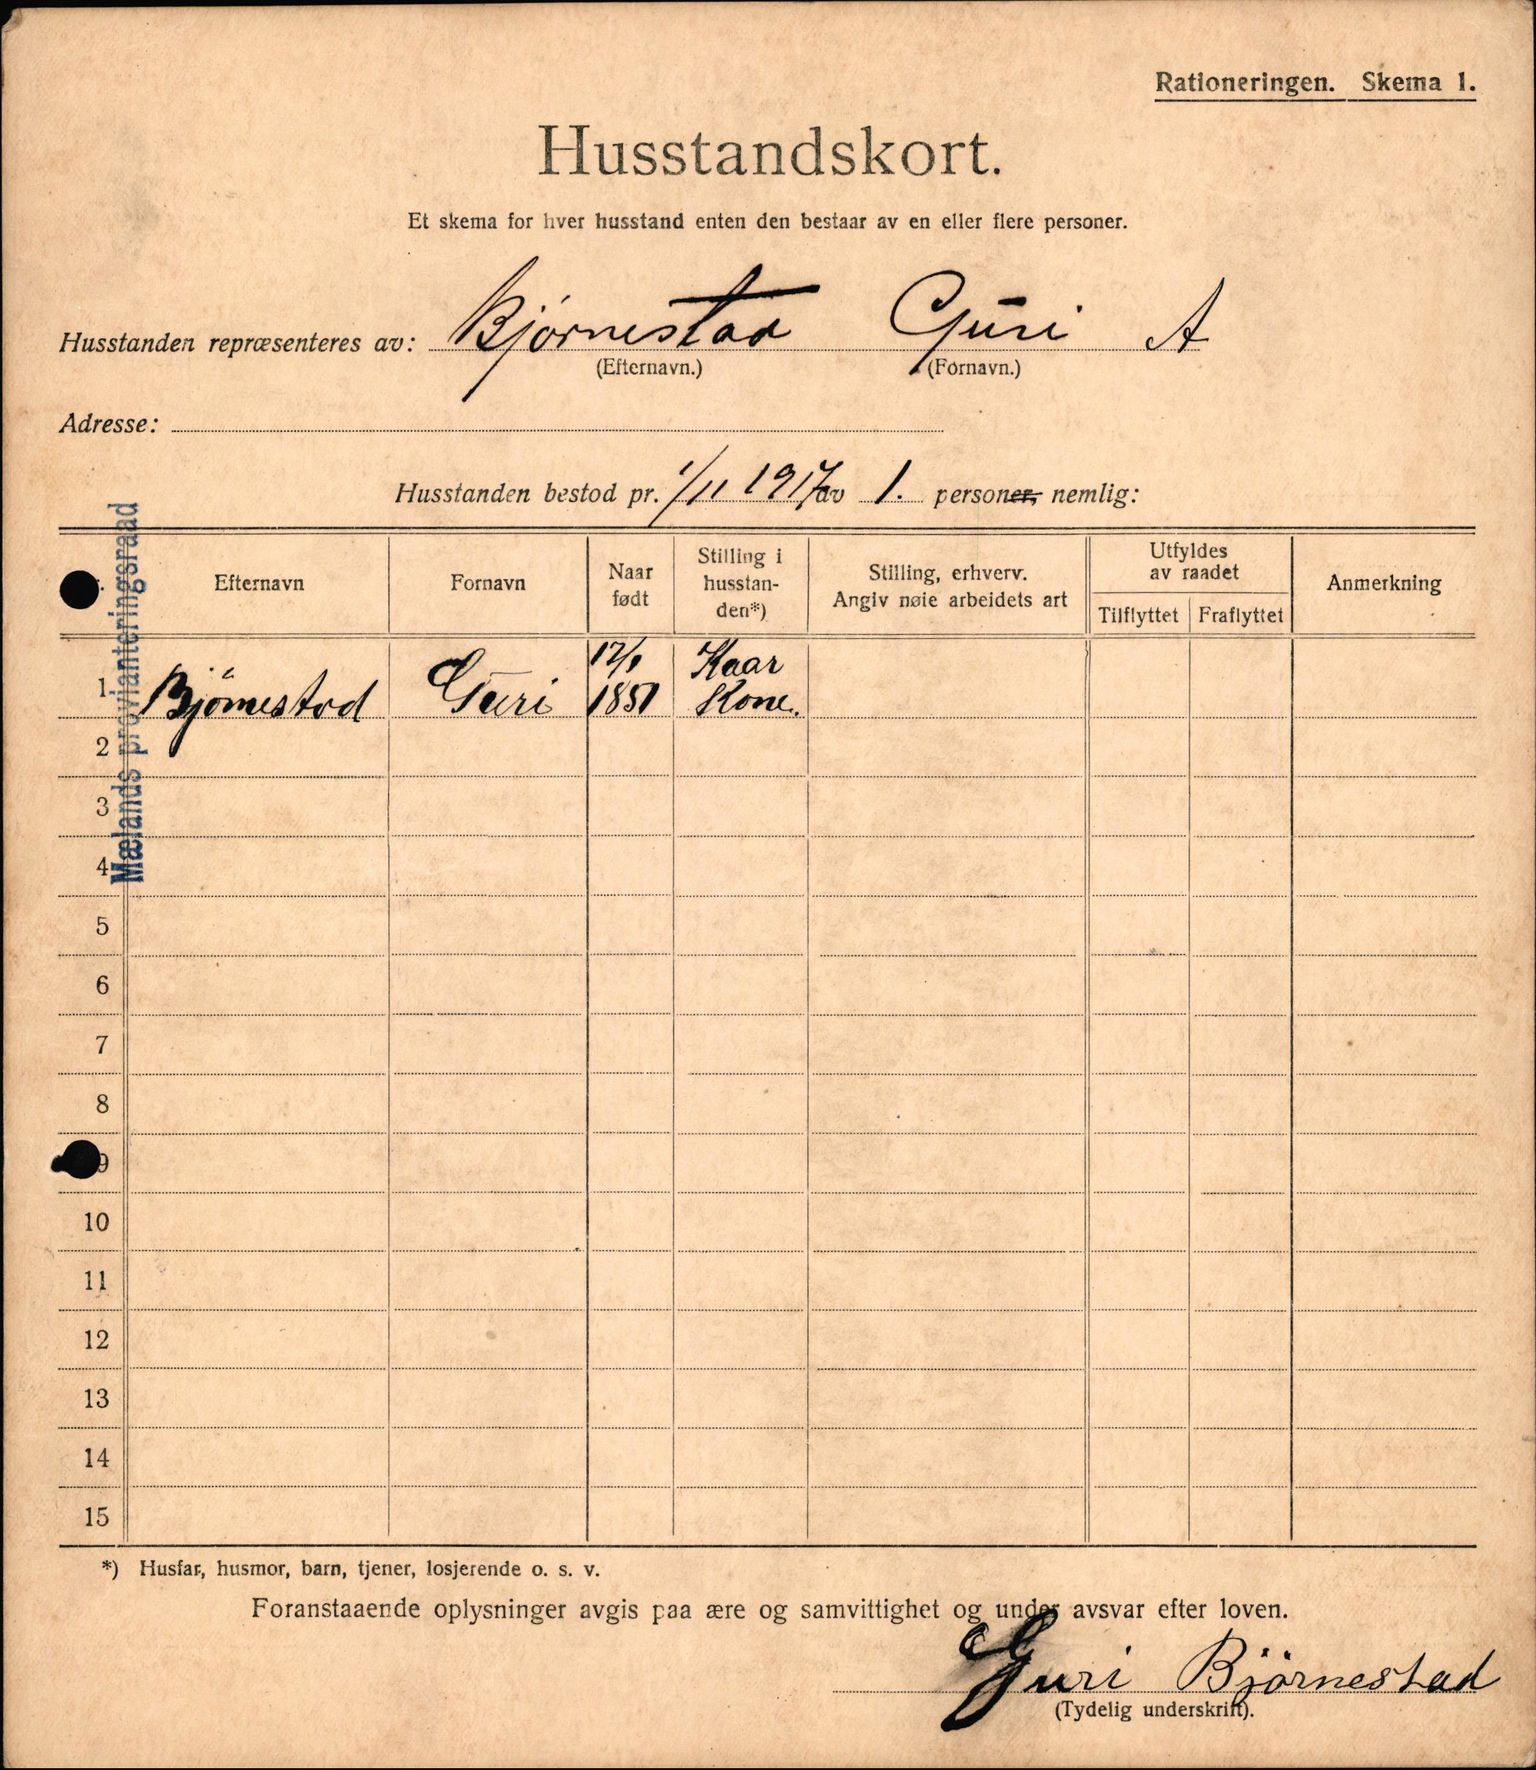 IKAH, Meland kommune, Provianteringsrådet, Husstander per 01.11.1917, 1917-1918, s. 84